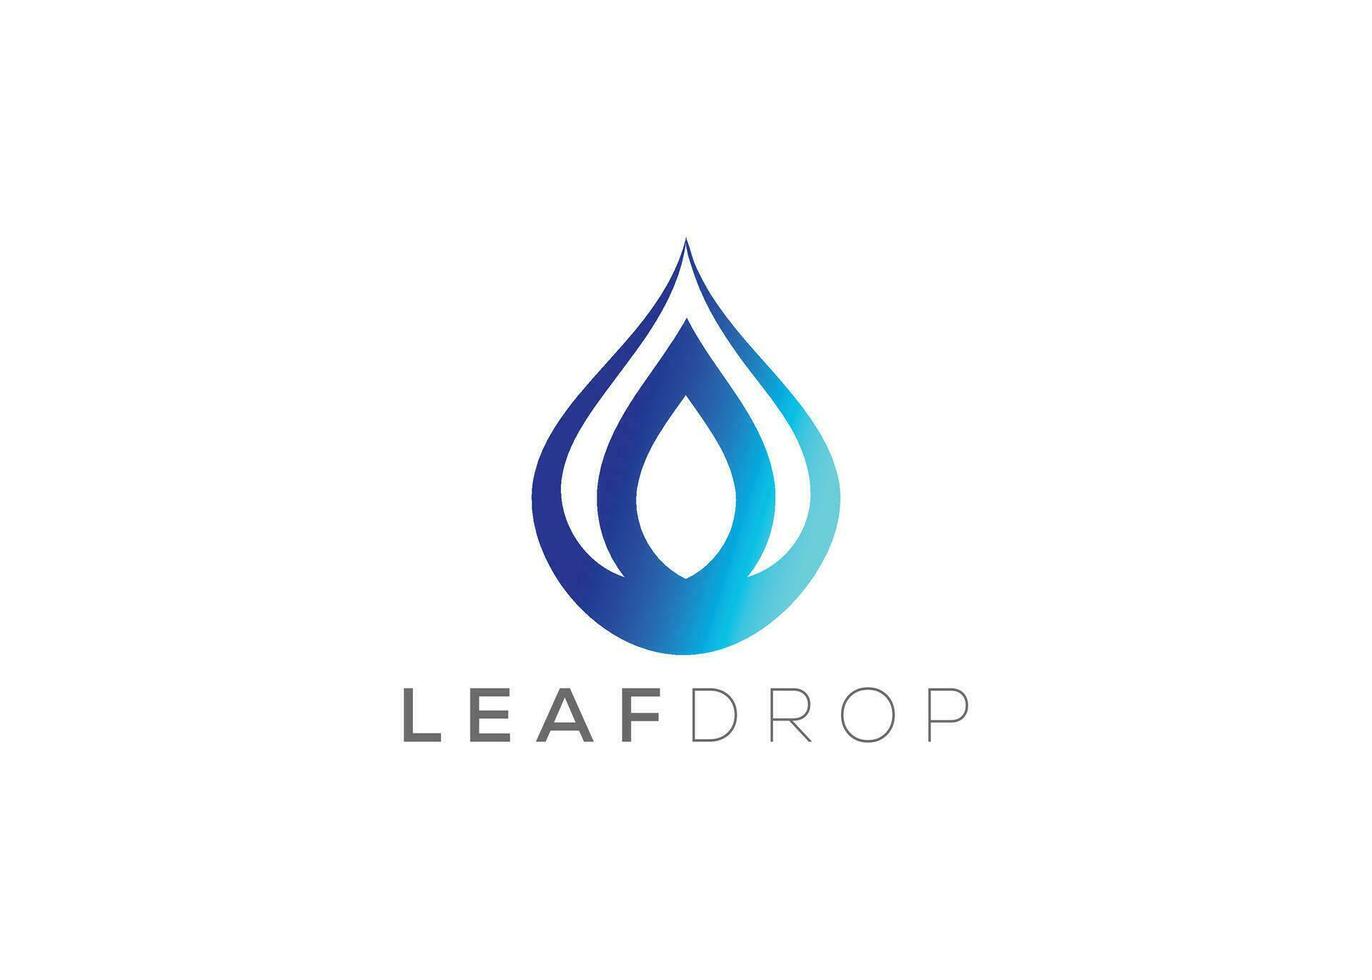 Water drop and Green leaf logo design vector template. Natural water drop vector logo